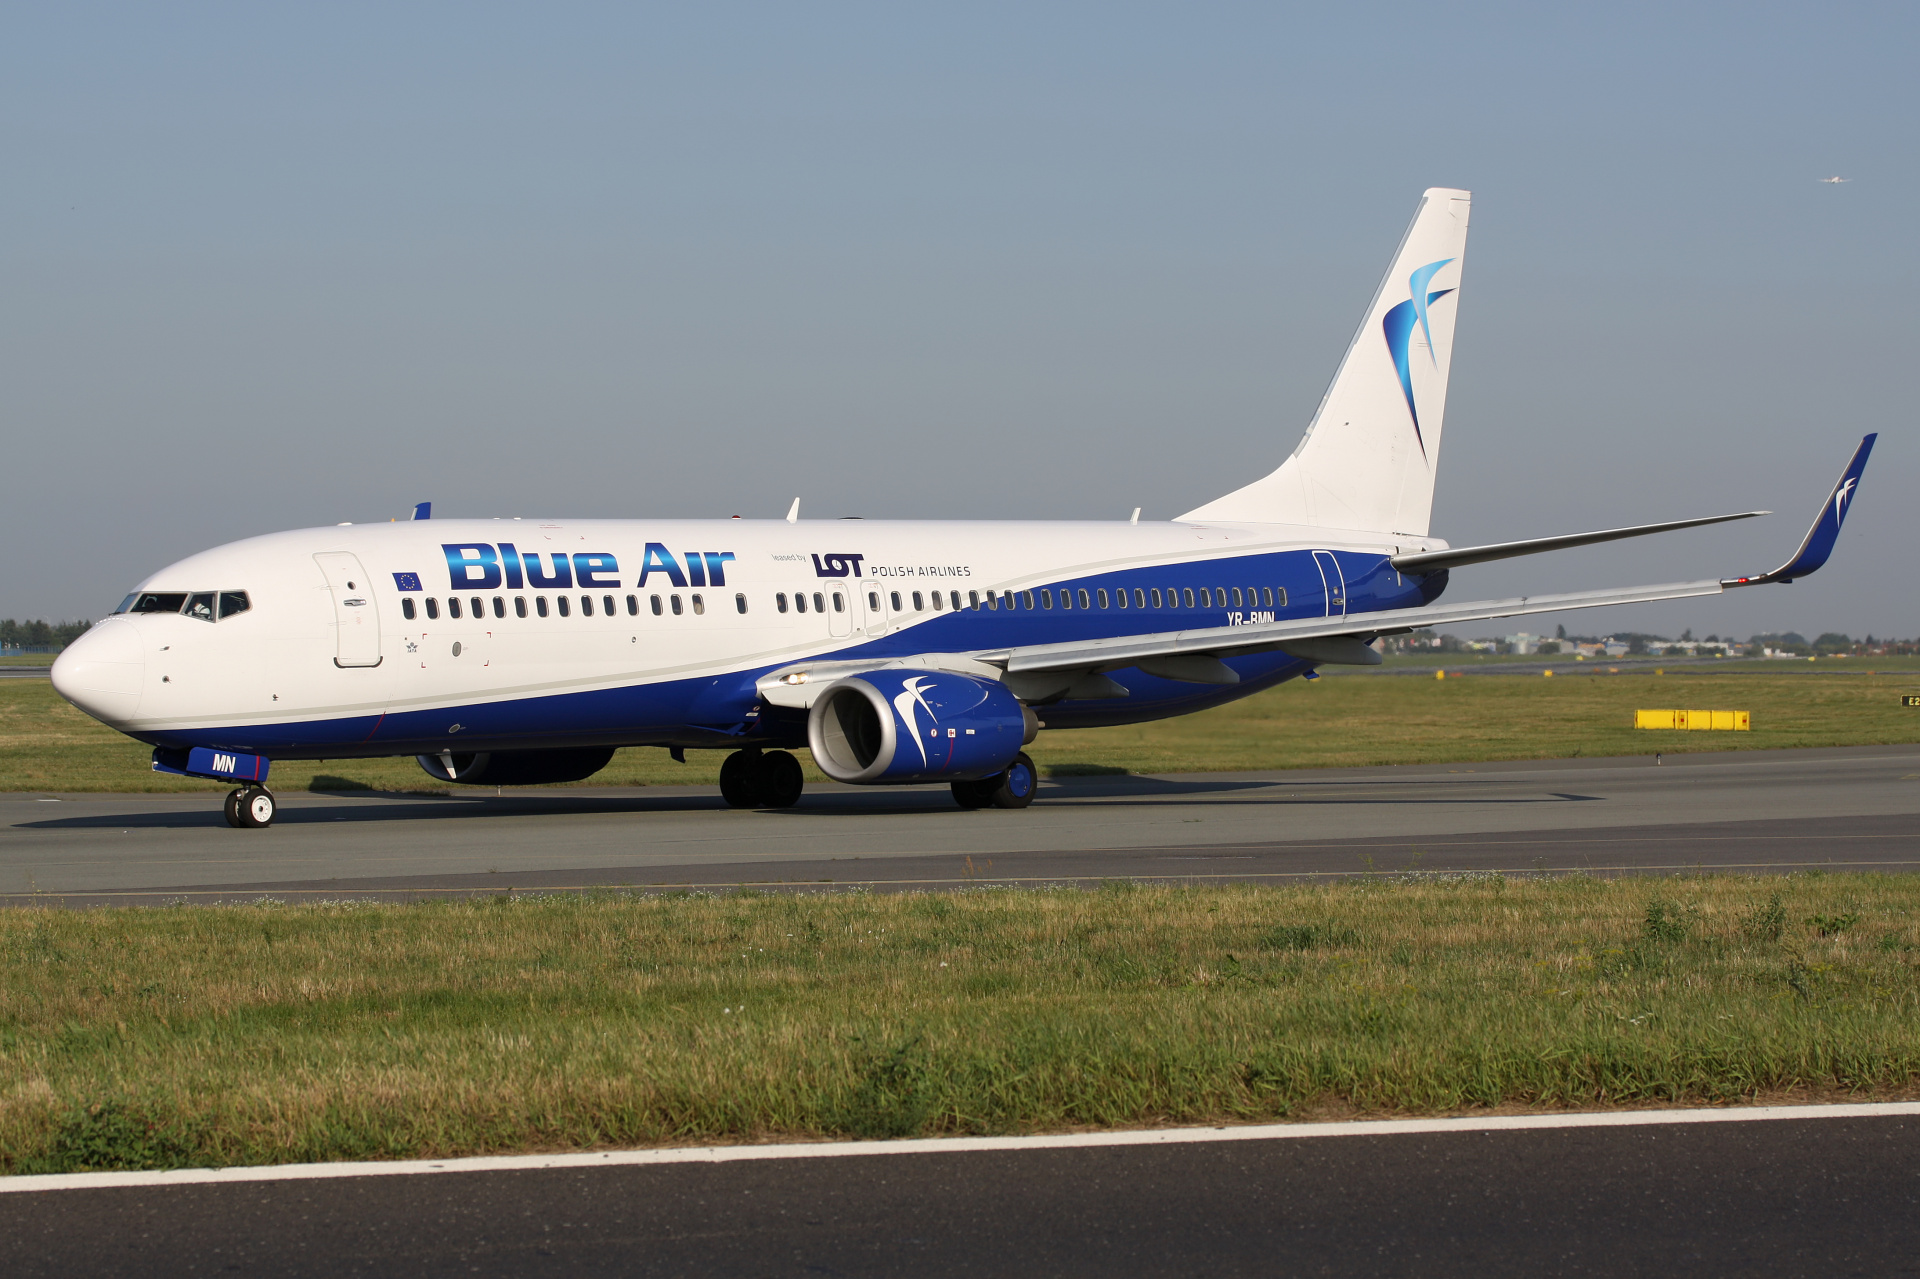 YR-BMN (LOT Polish Airlines) (Aircraft » EPWA Spotting » Boeing 737-800 » Blue Air)